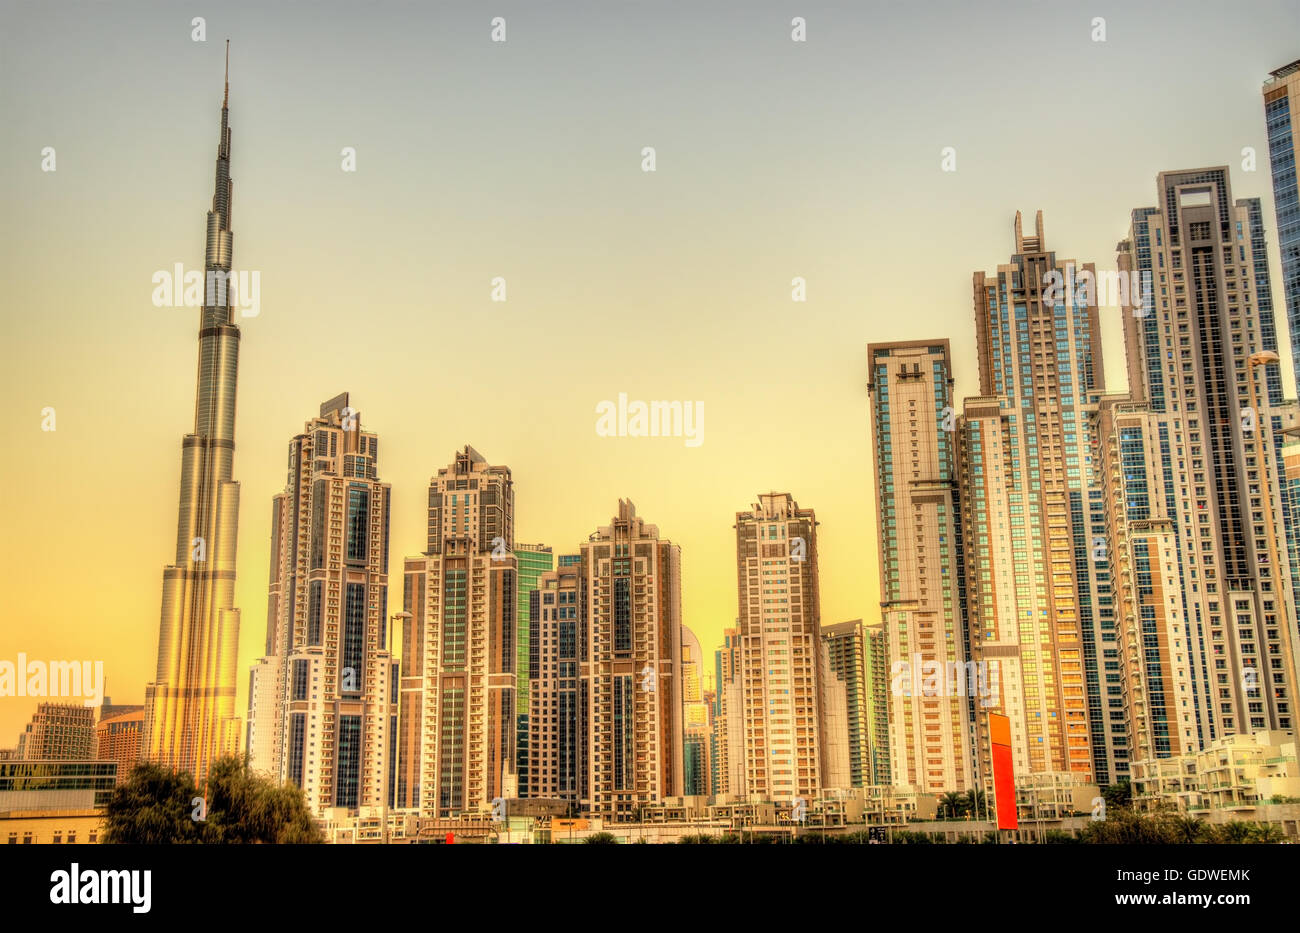 Skyscrapers in Business Bay district of Dubai, UAE Stock Photo